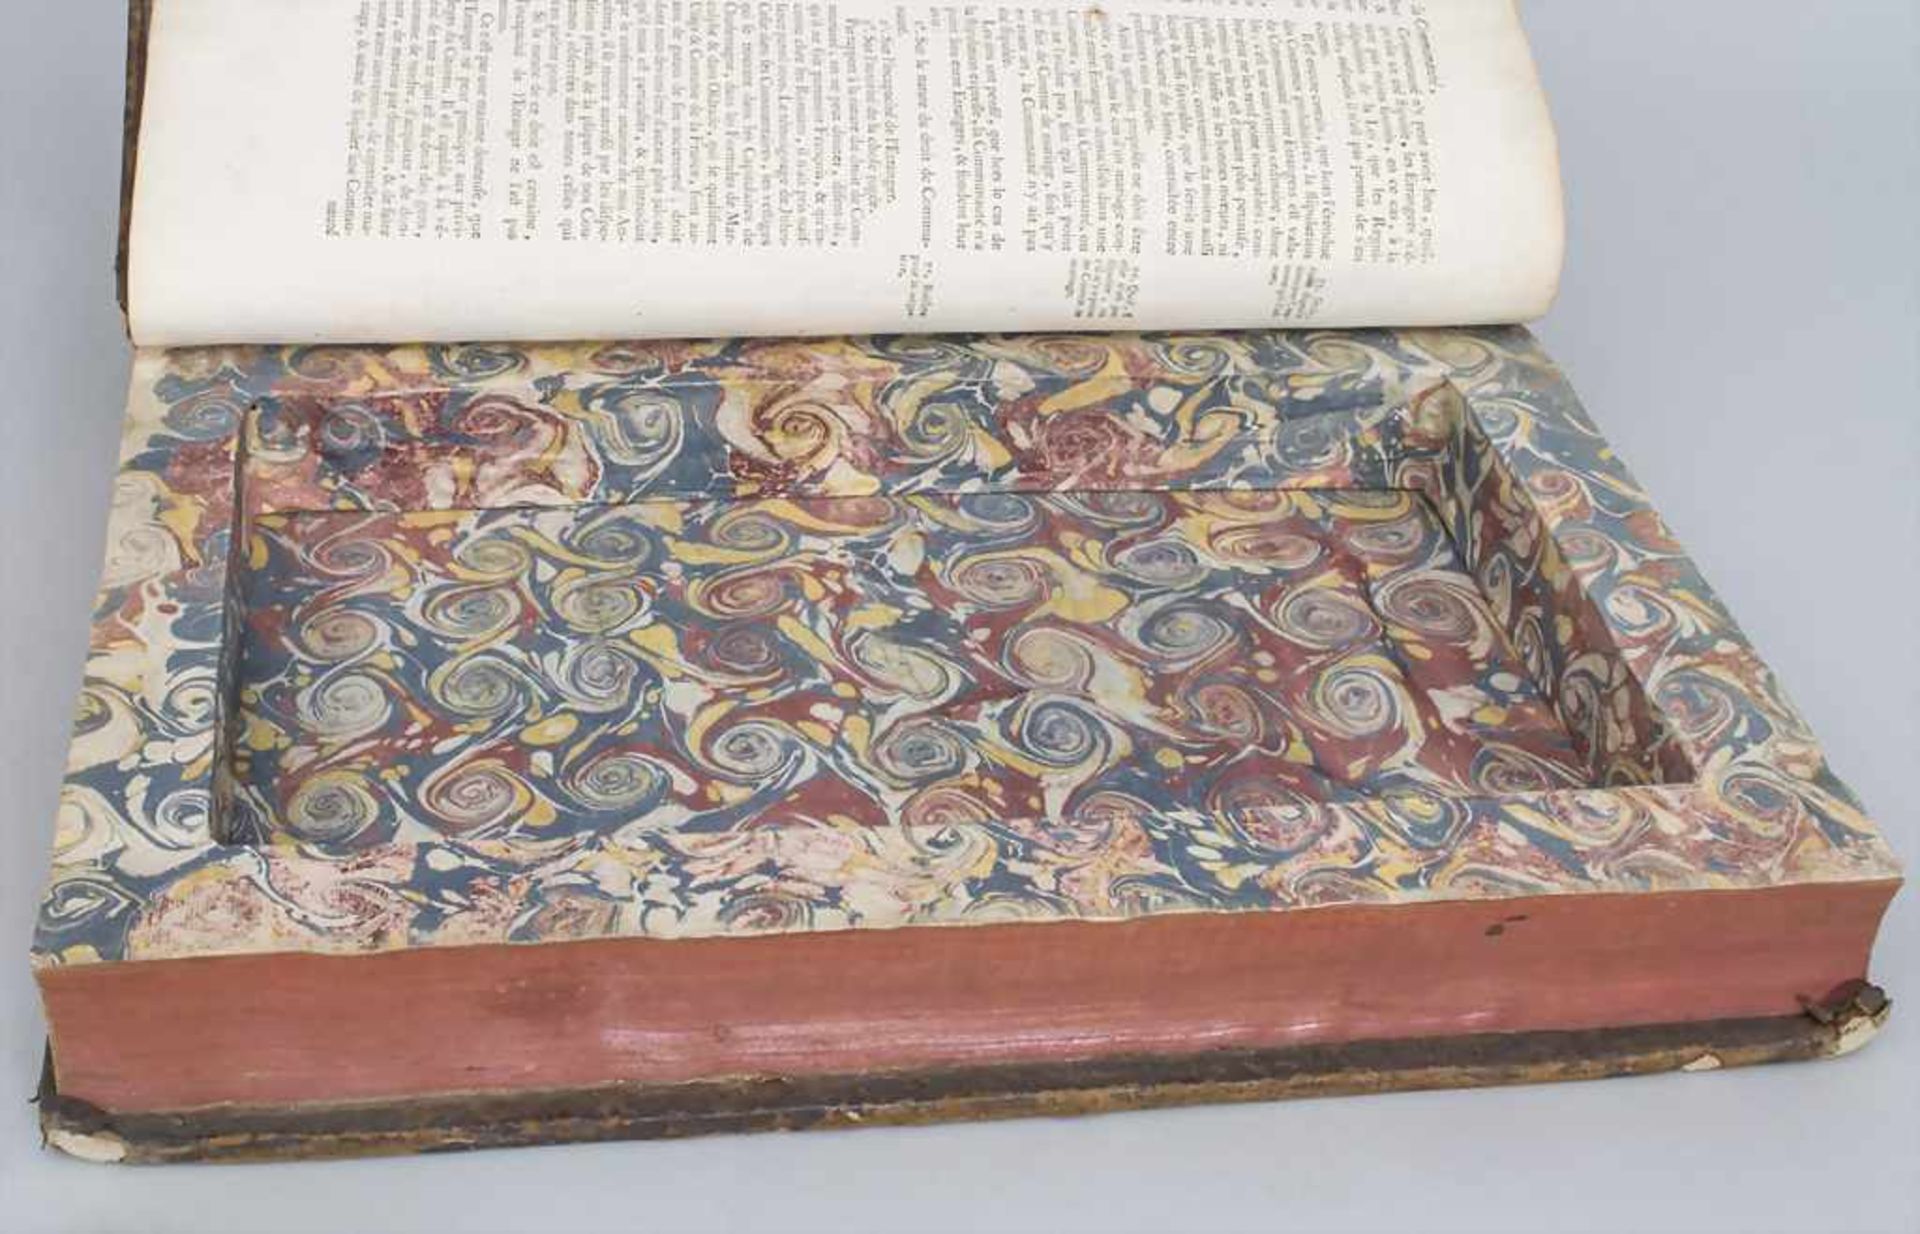 Antiquarische Buchattrappe mit Buchkassette / An antiquarian book with secret compartment - Image 2 of 2